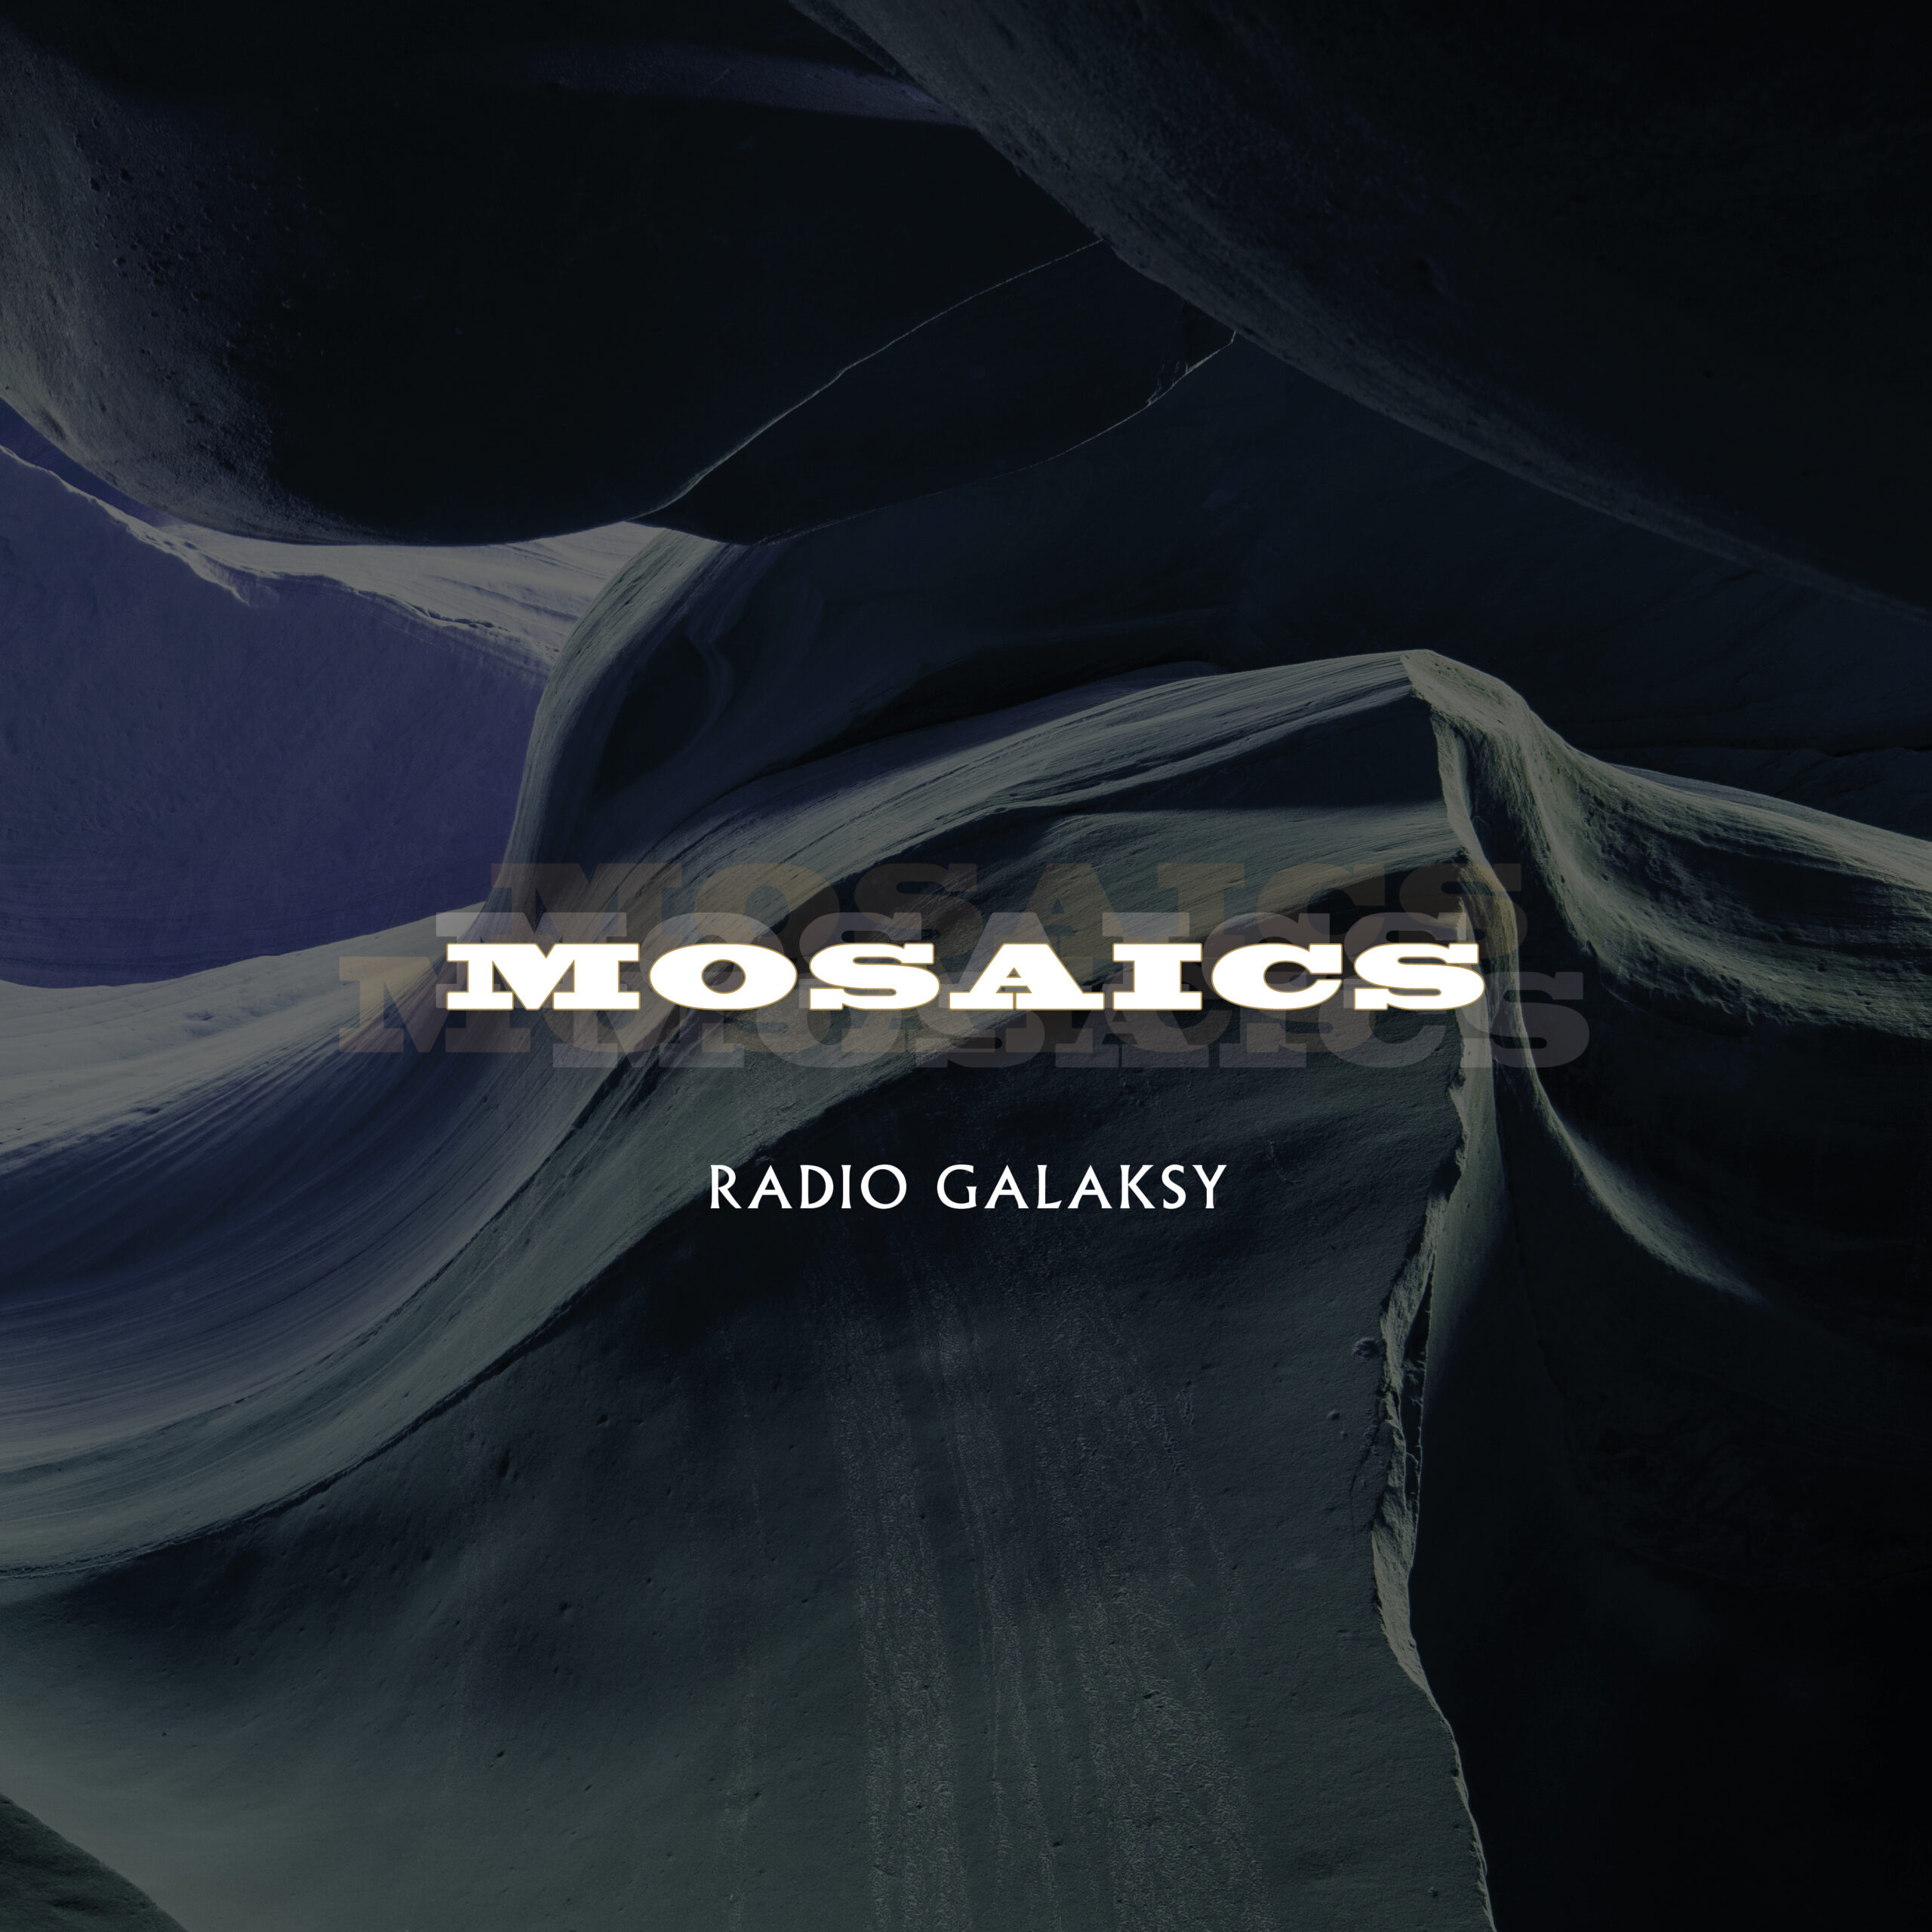 Radio Galaksy